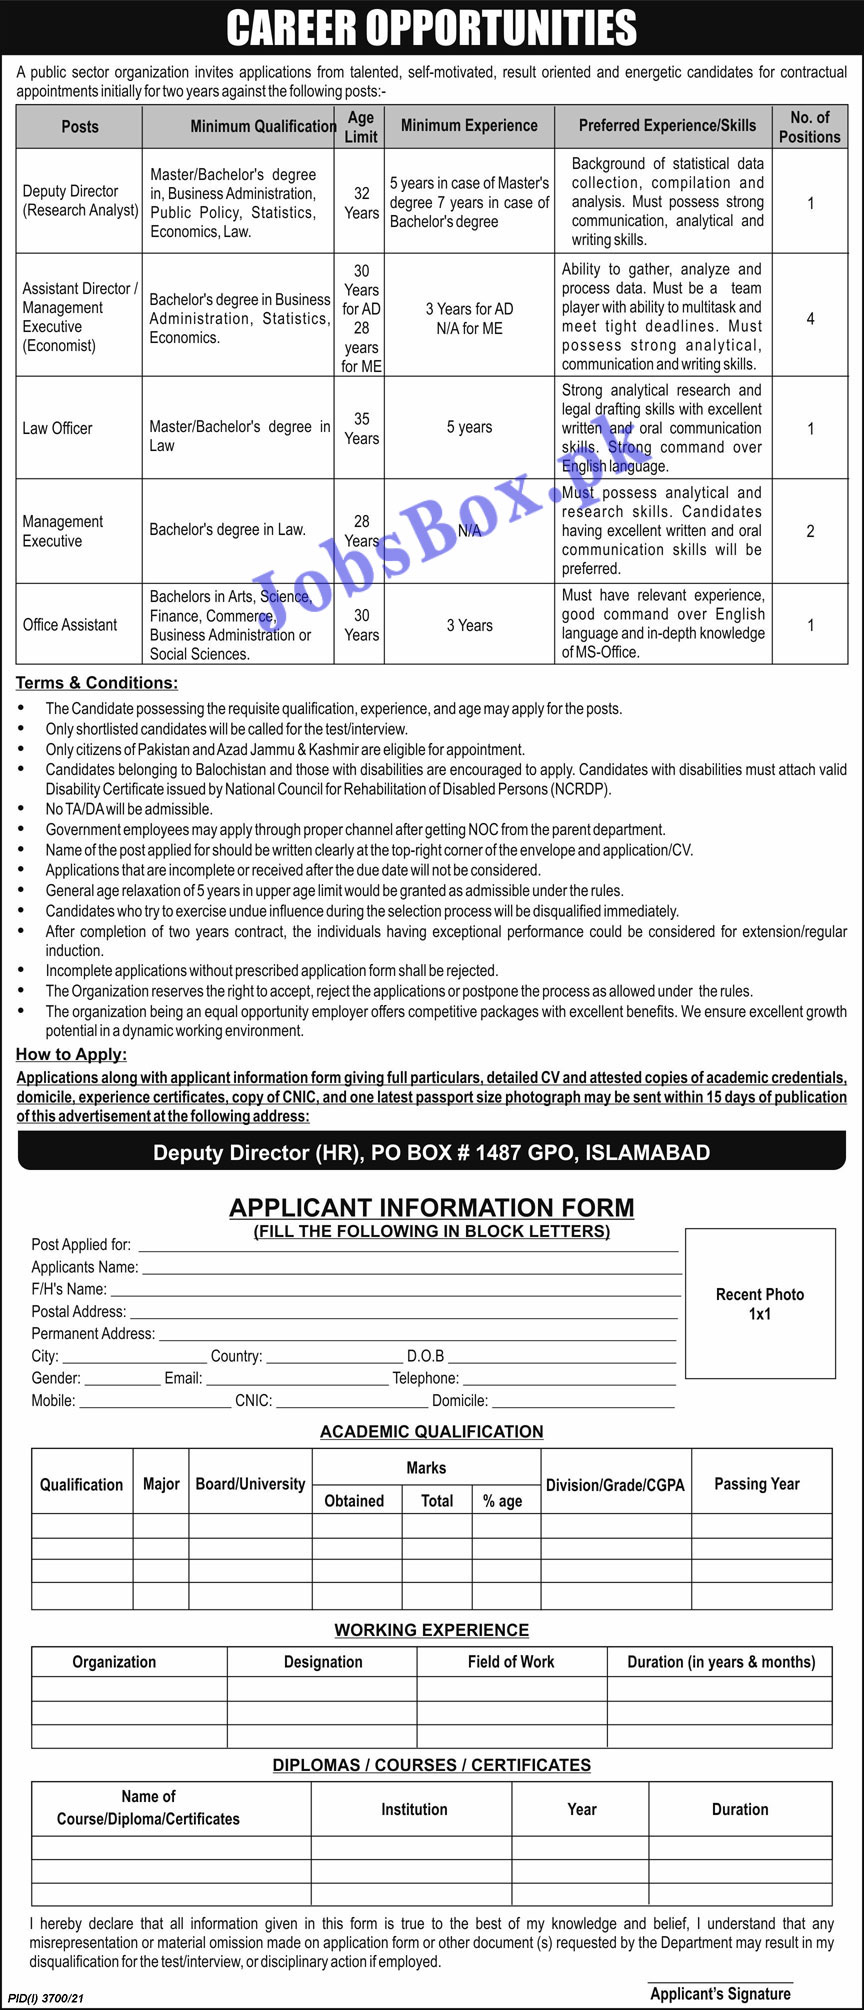 Public Sector Organization PO Box No 1487 Islamabad Jobs 2021